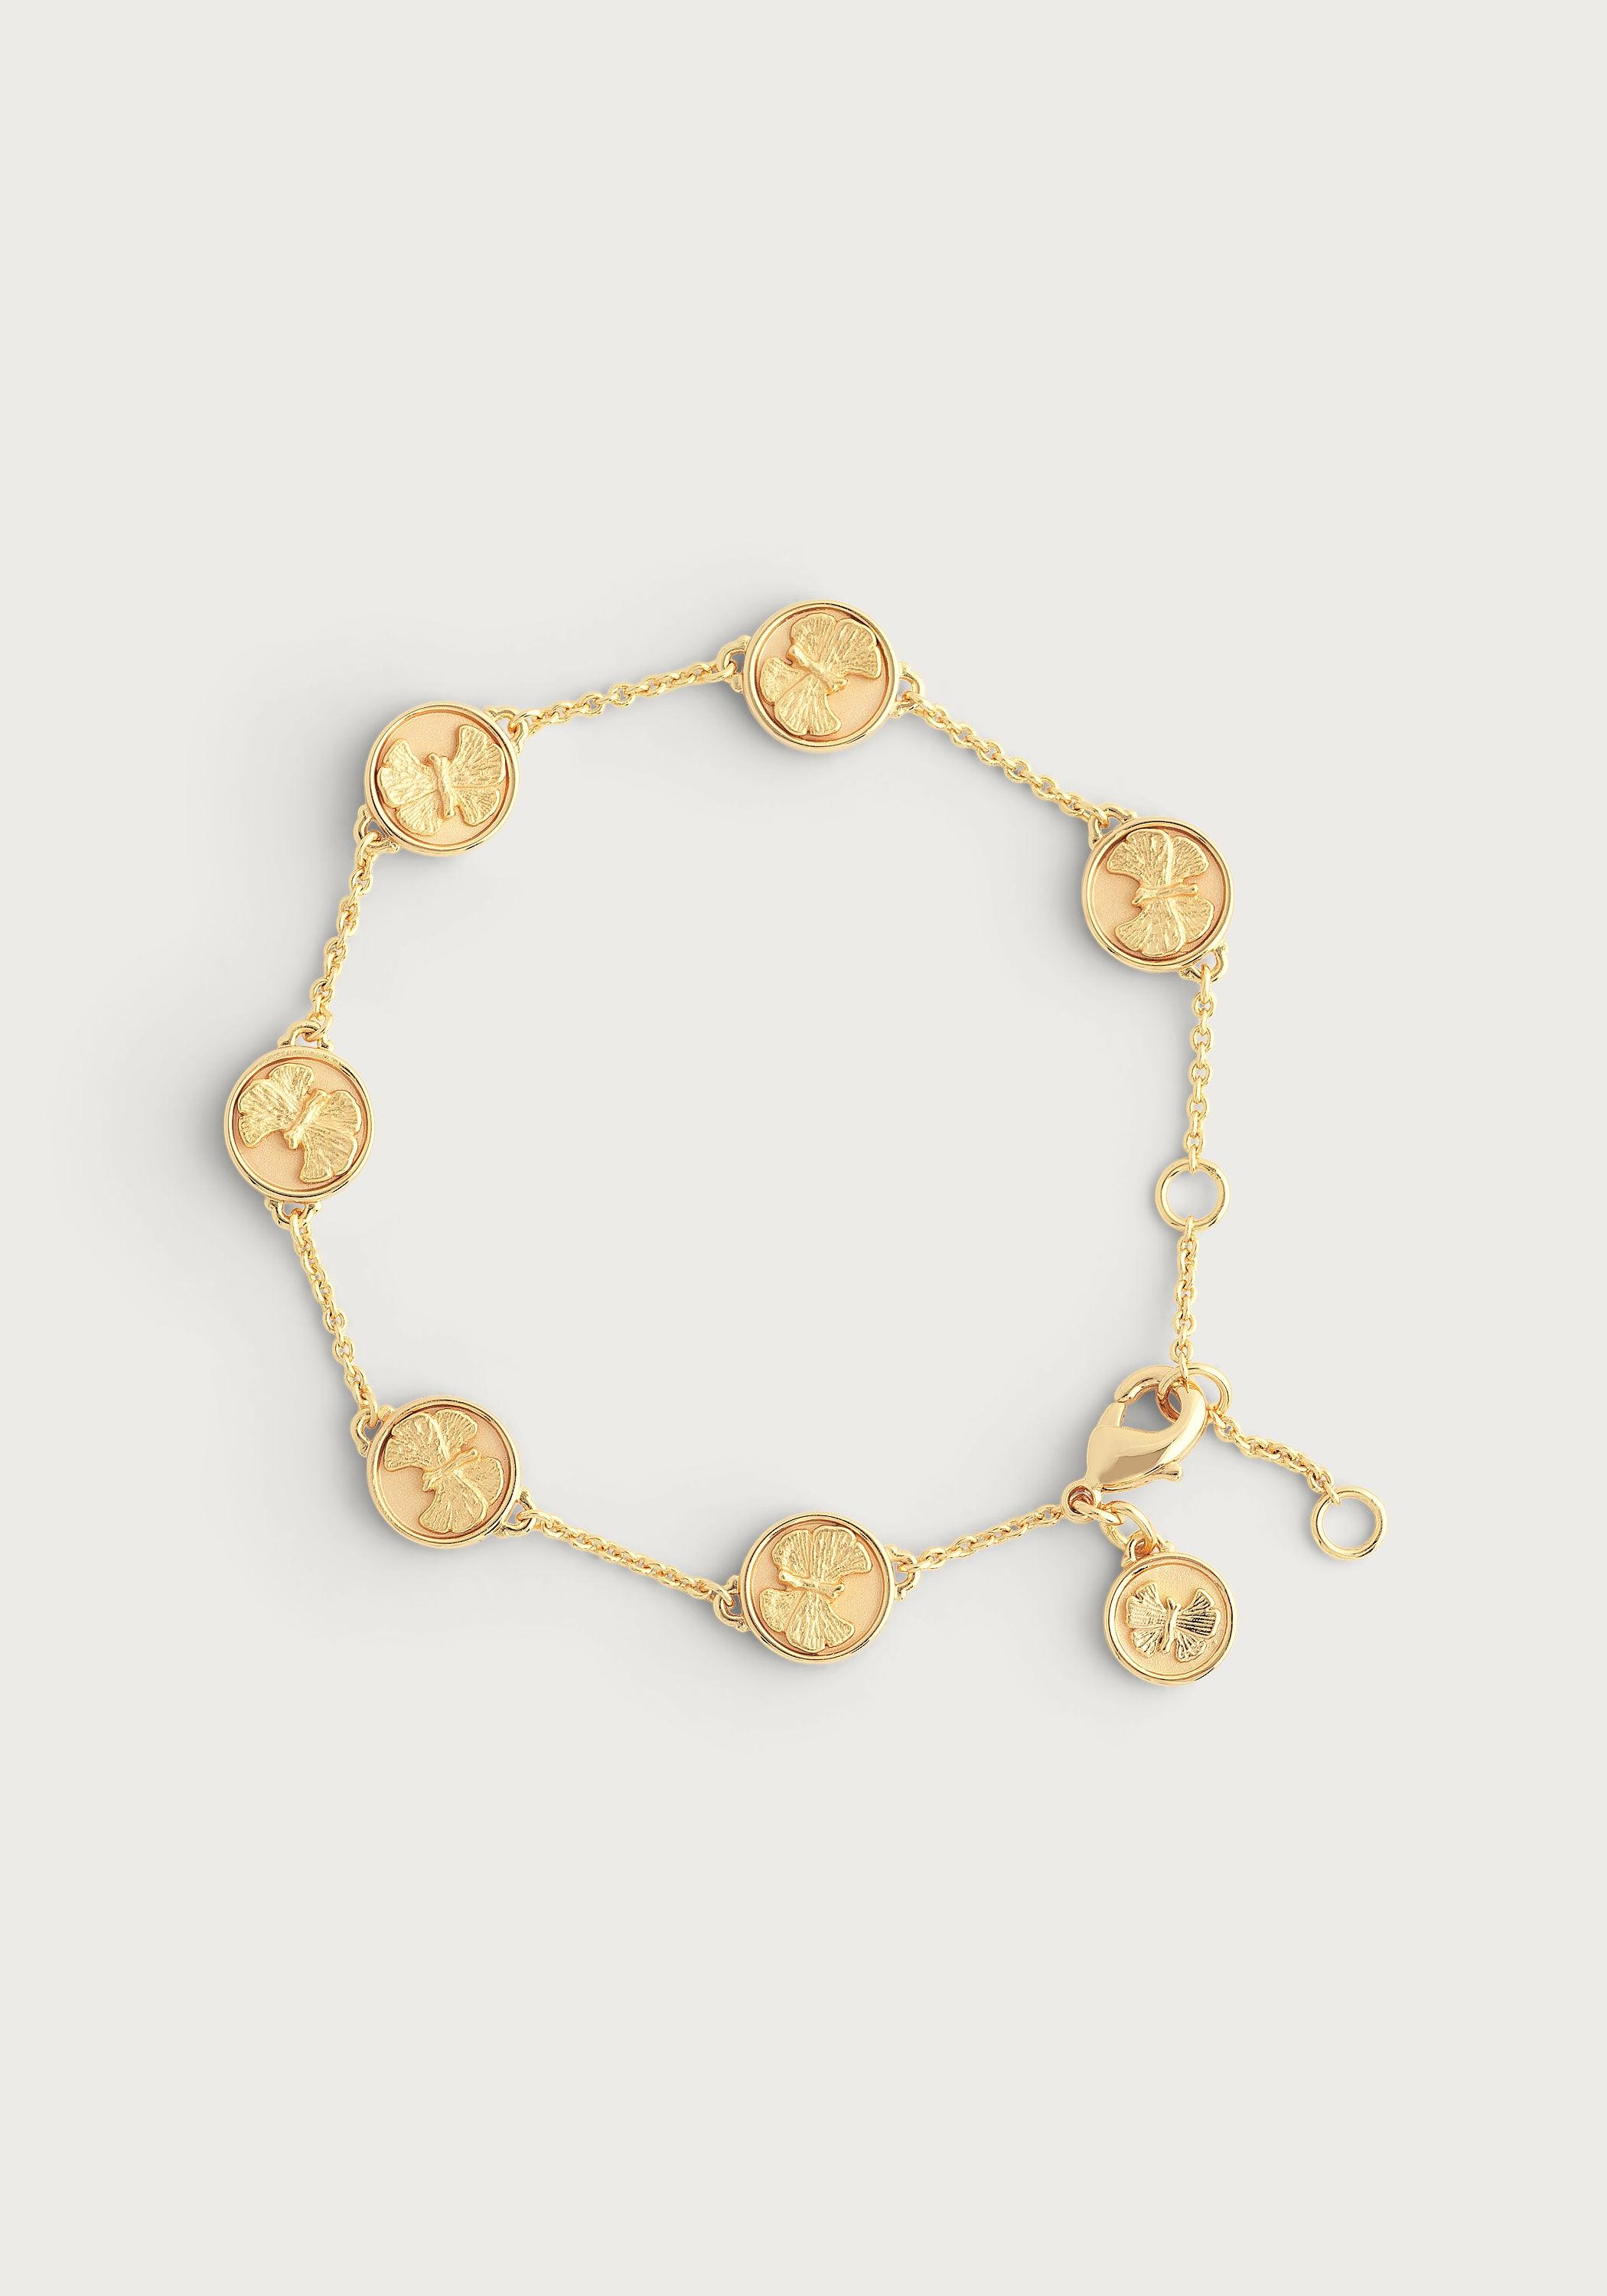 Butterfly Coin Charm Bracelet - Anabel Aram